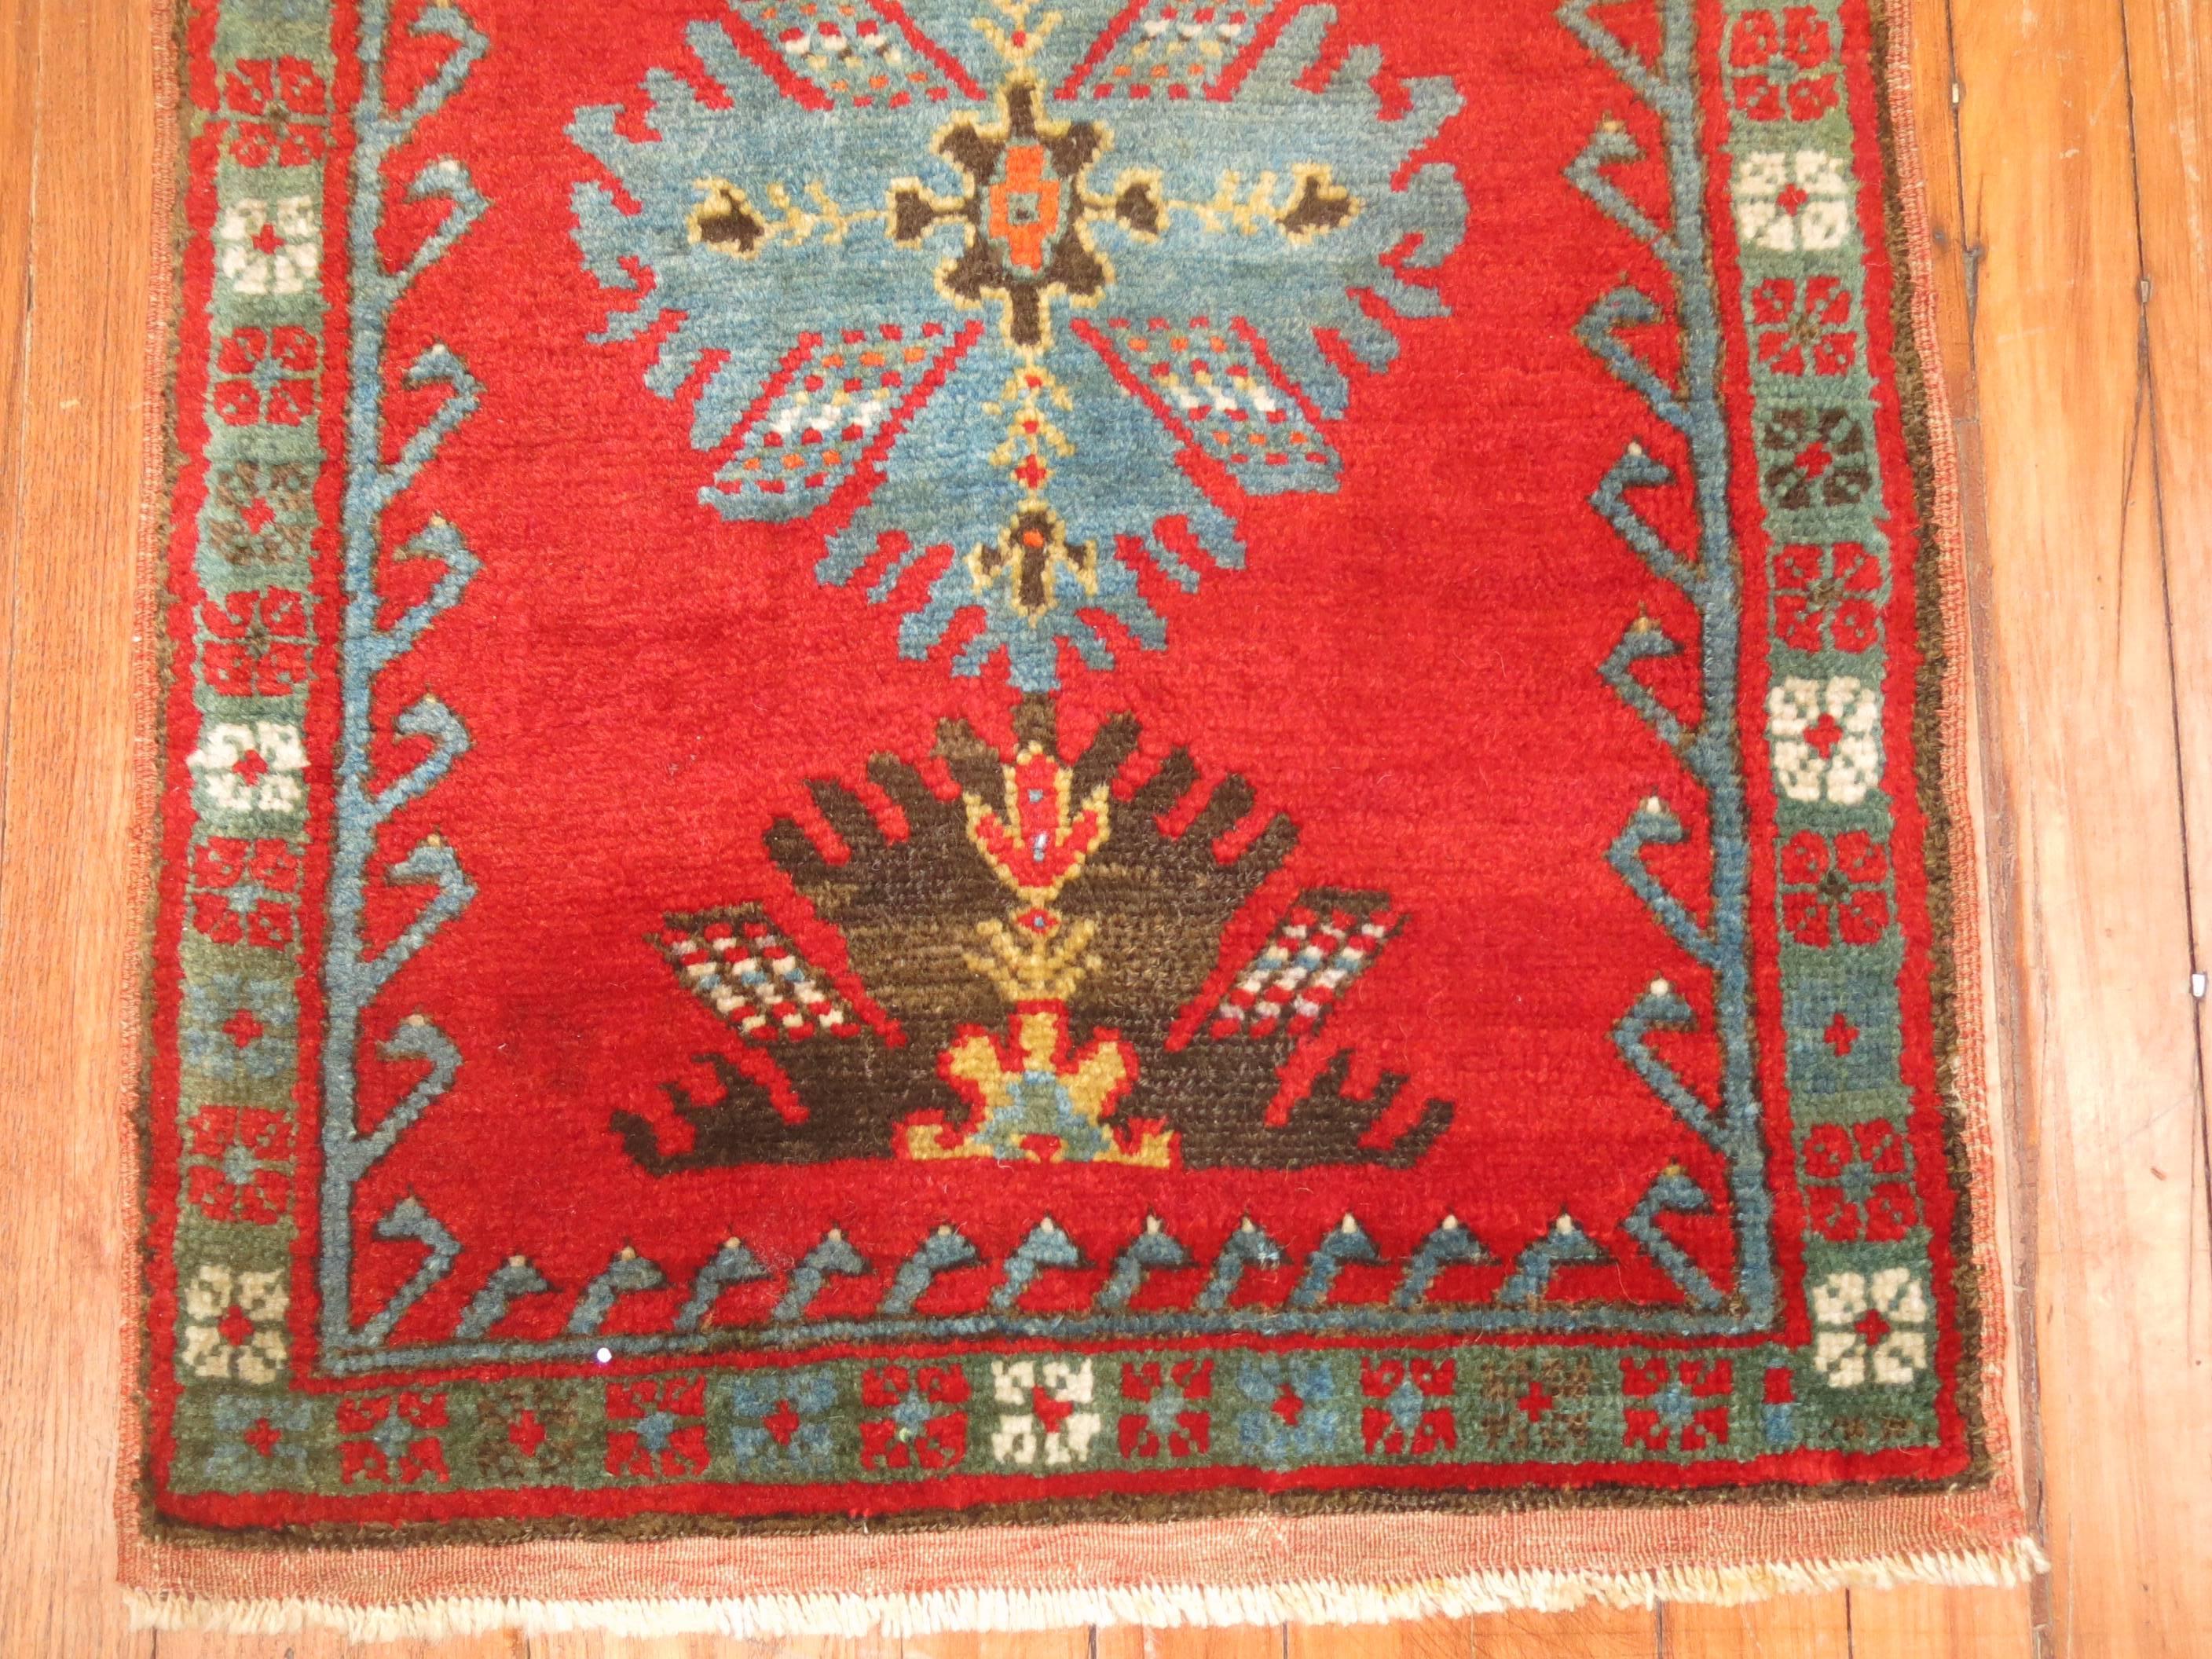 Rich colored Antique Turkish Yastik Rug.